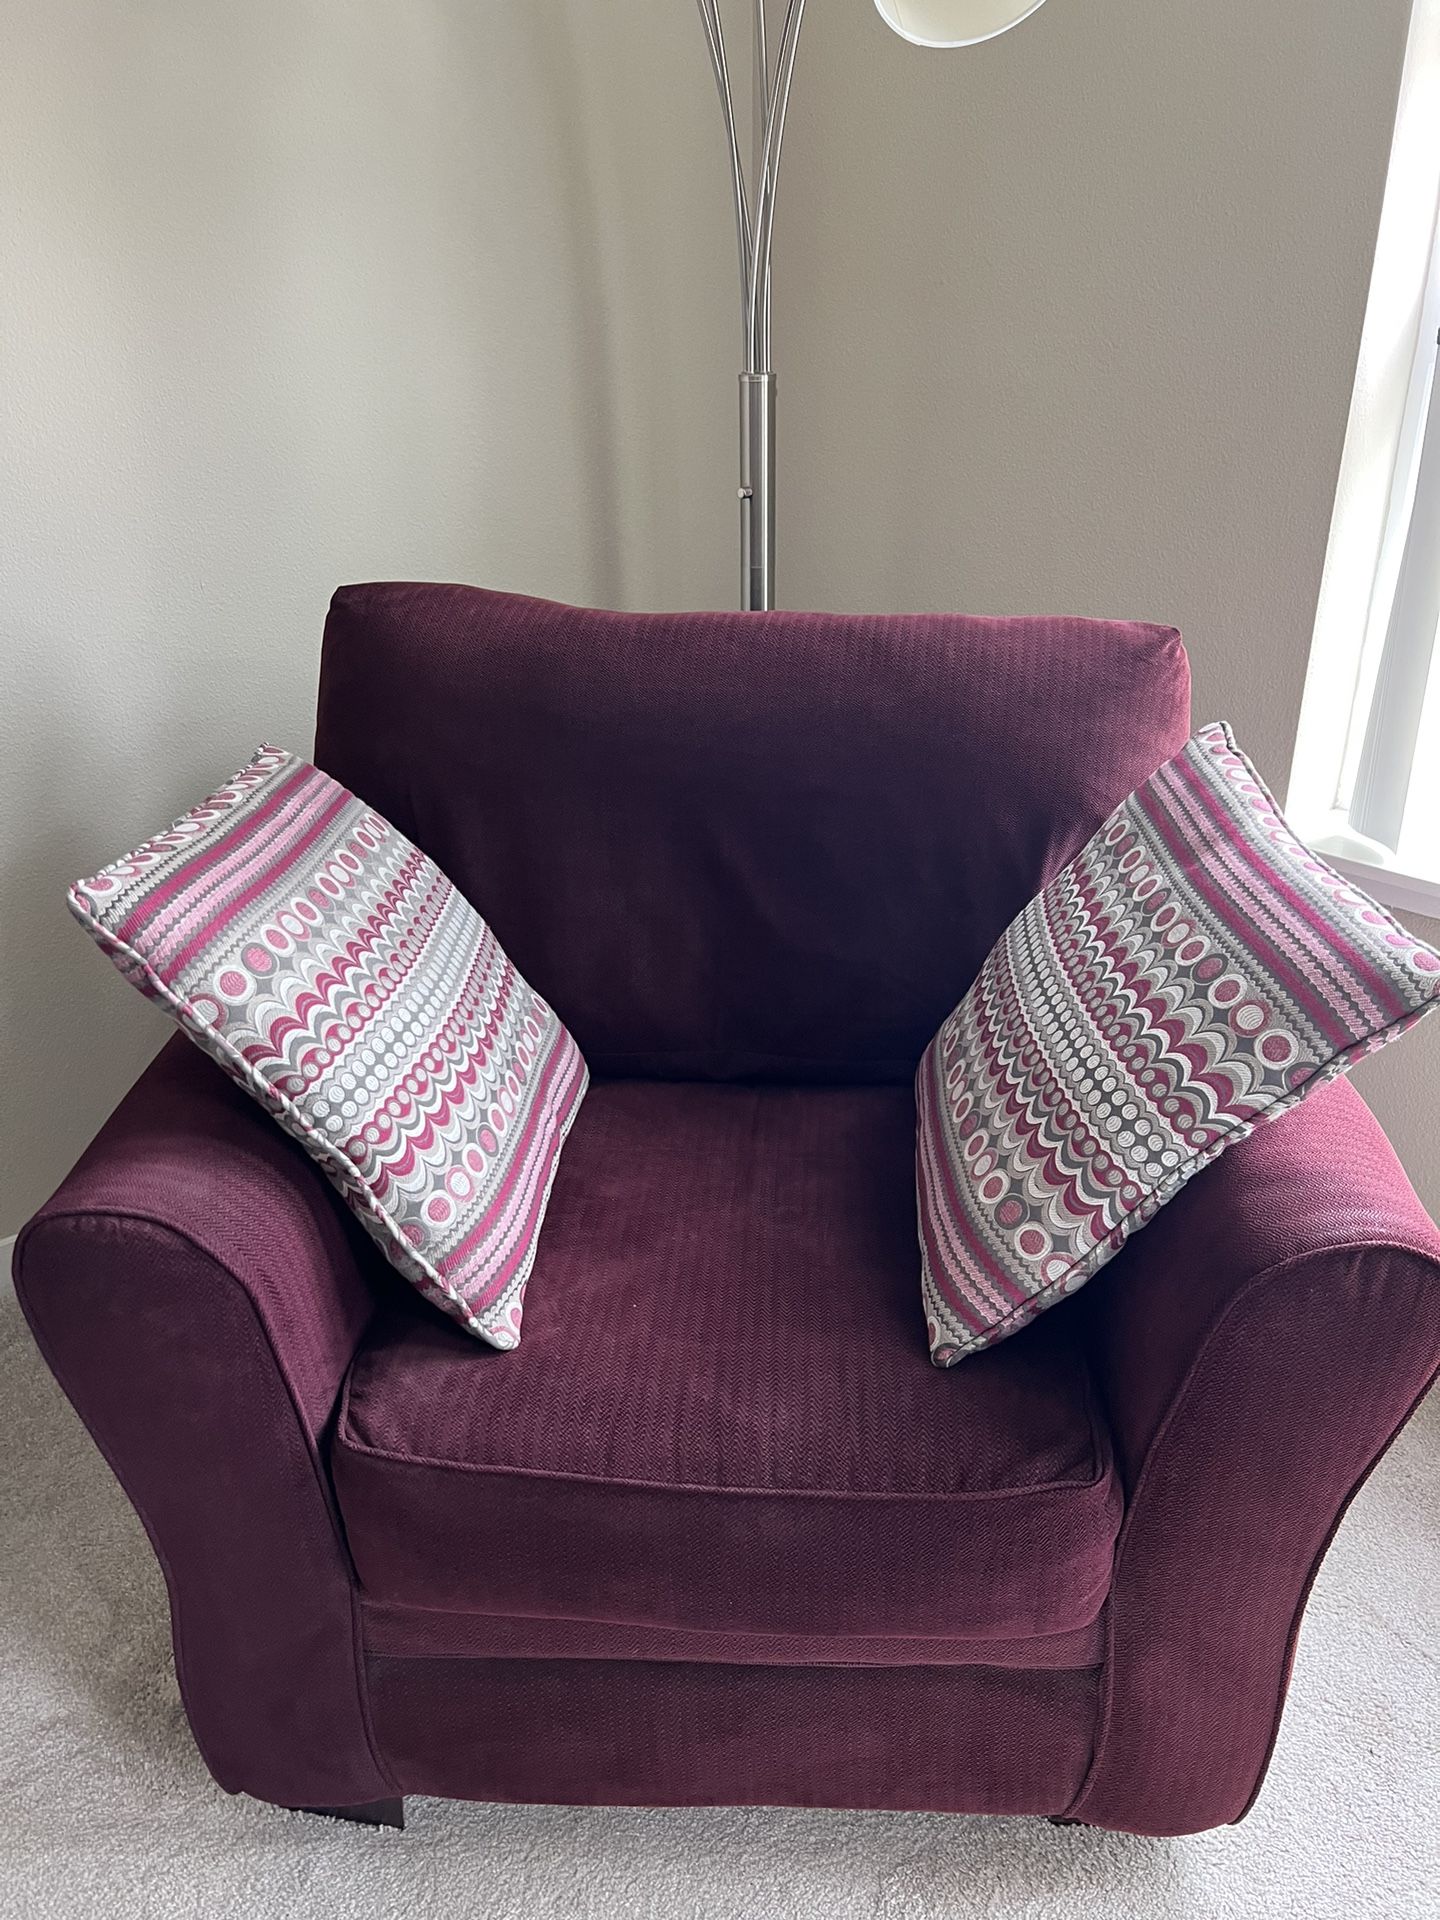 Accent armchair - burgundy corduroy upholstery